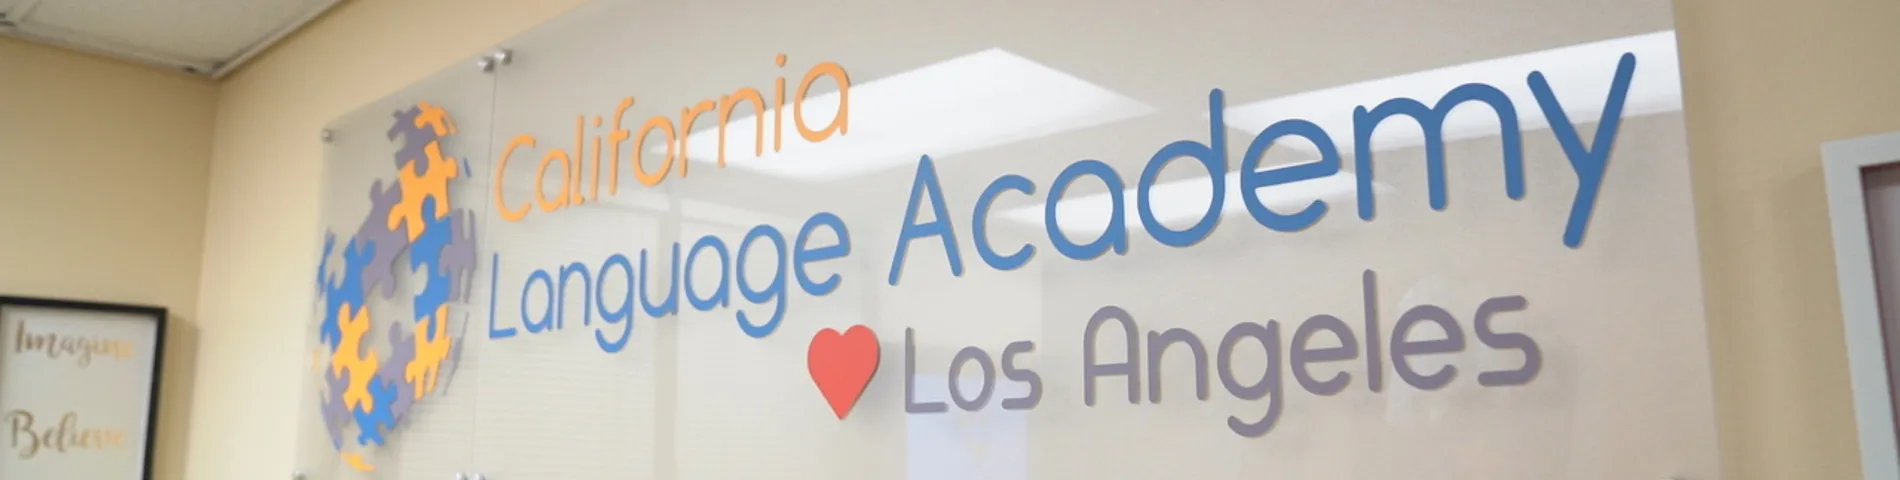 California Language Academy obrazek 1